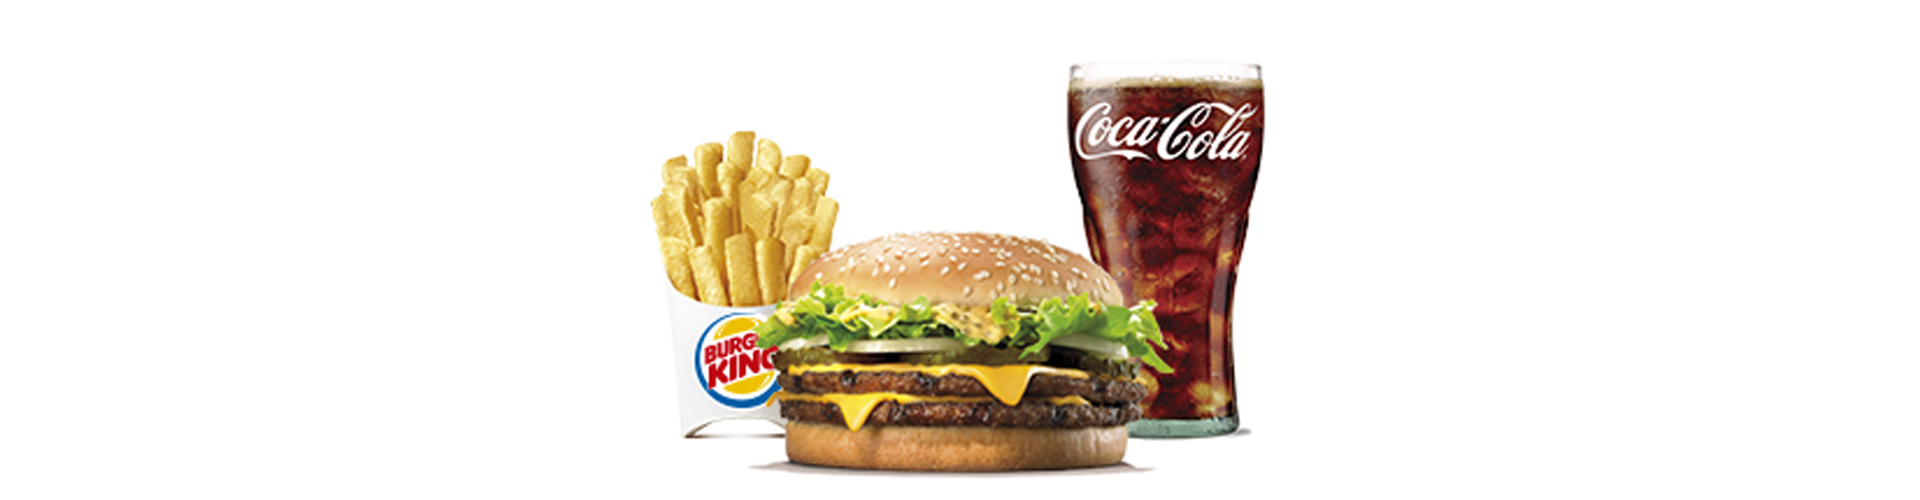 menu-big-king-burgerking-40001712-agua-ensalada